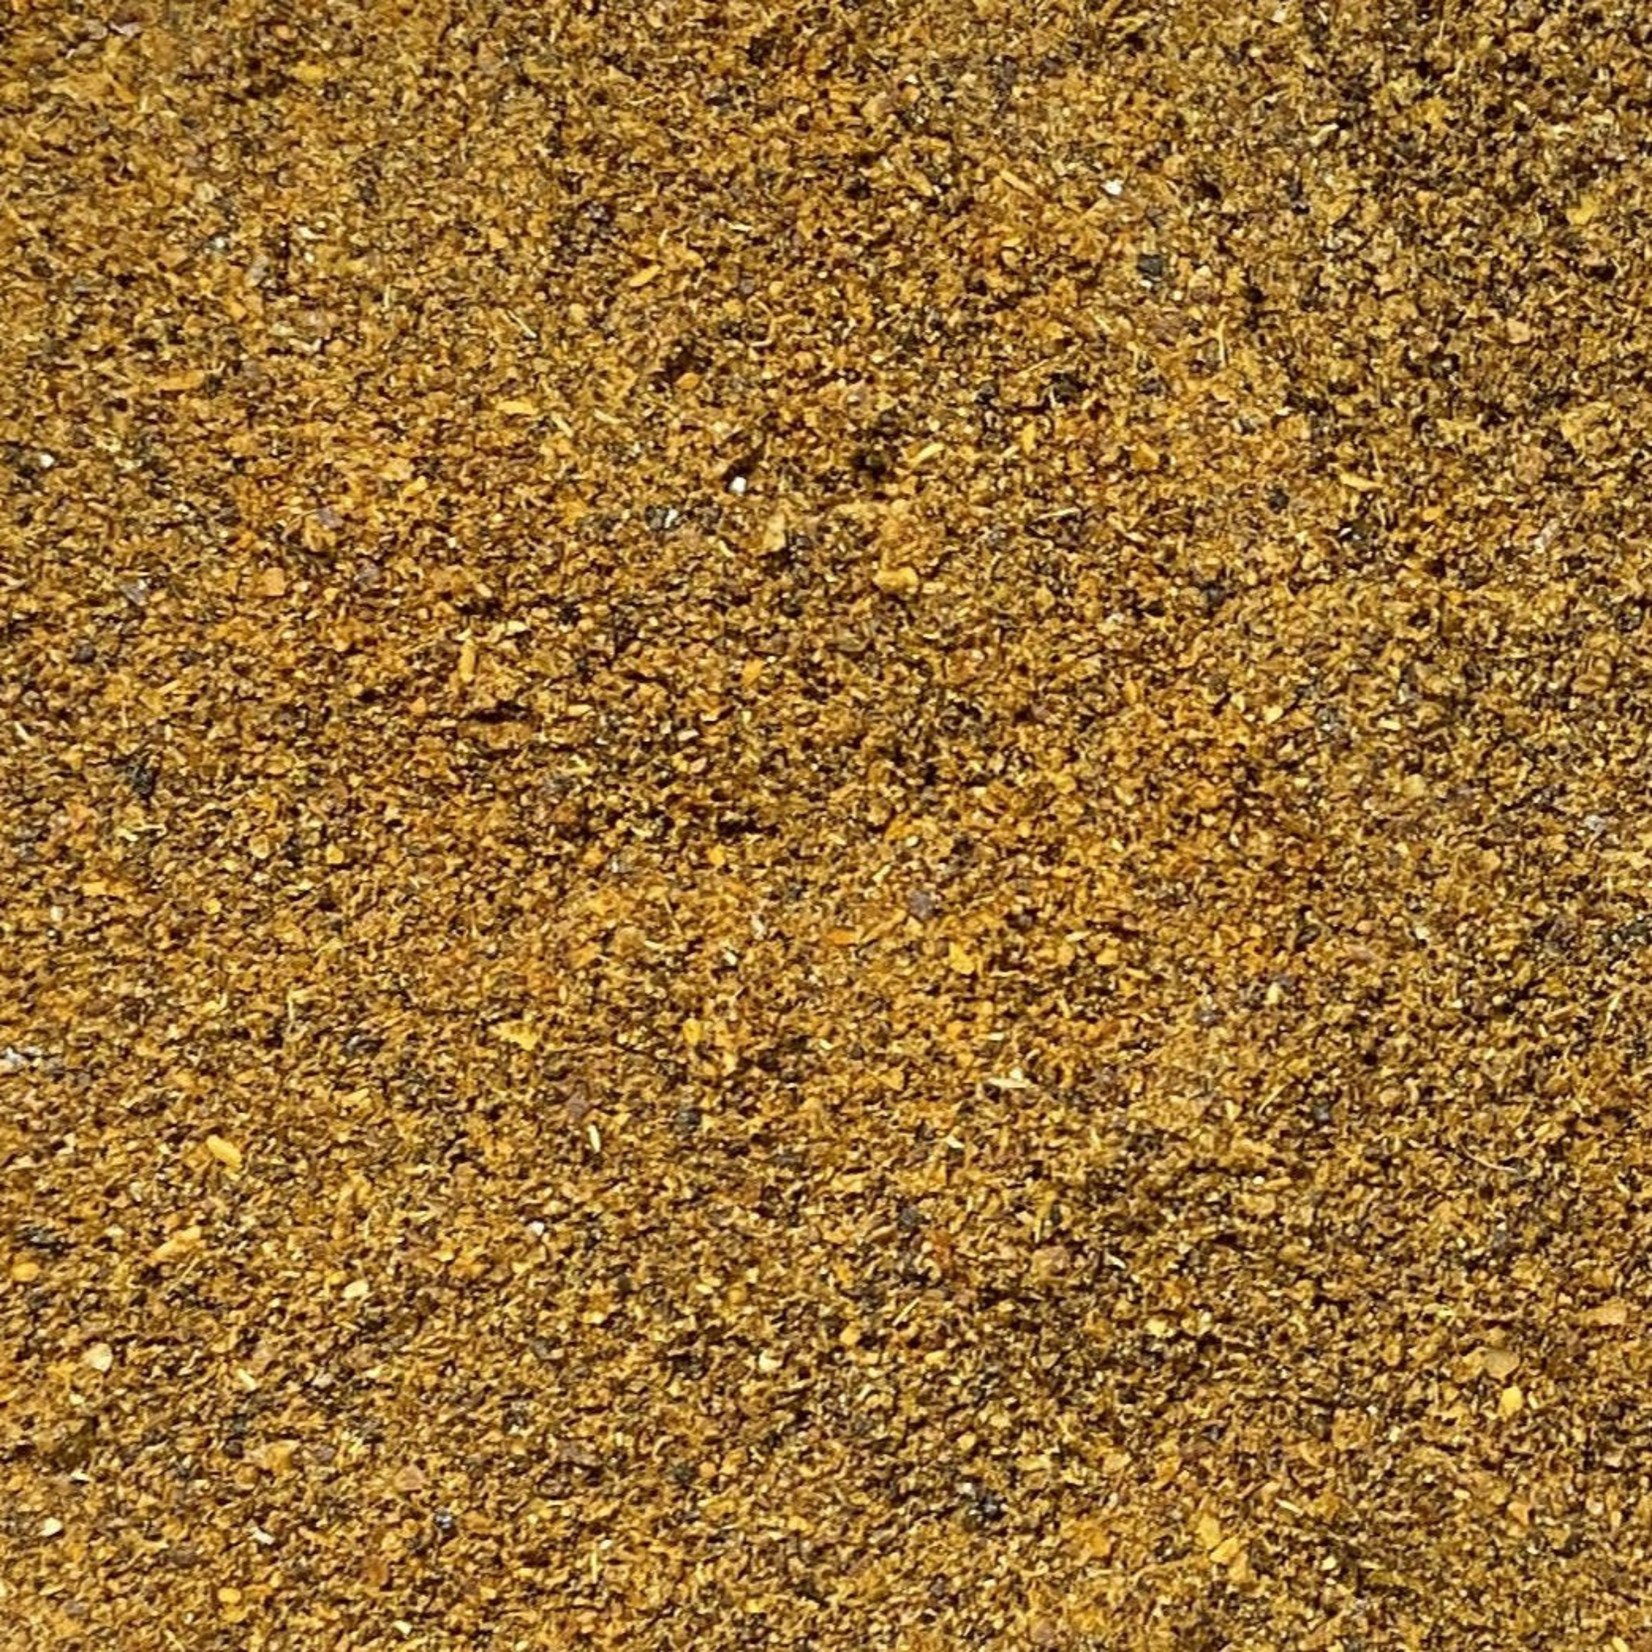 Starwest Saltless Chili Powder 1.5K H.U. (Certified Organic)